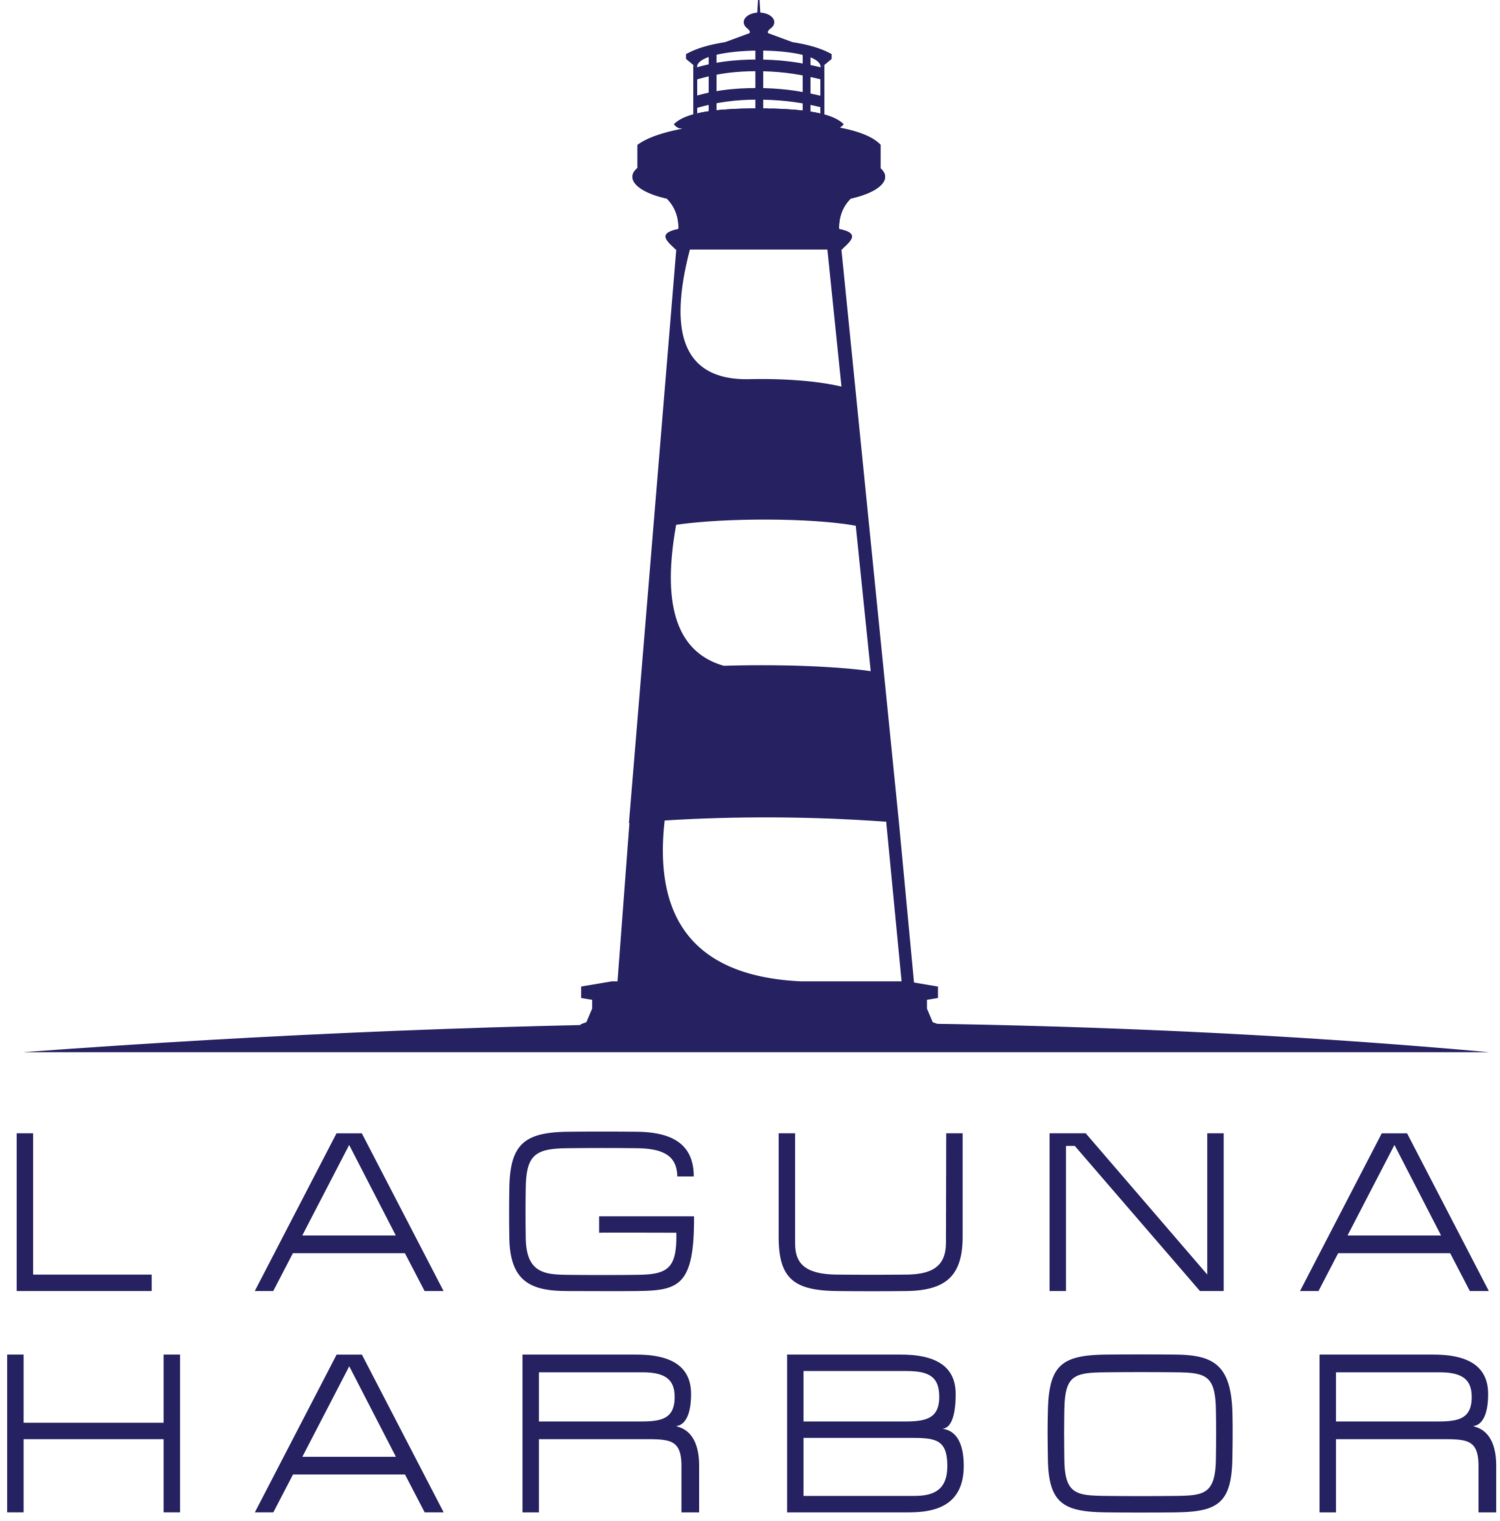 LAGUNA HARBOR | Waterfront Community on Galveston Bay